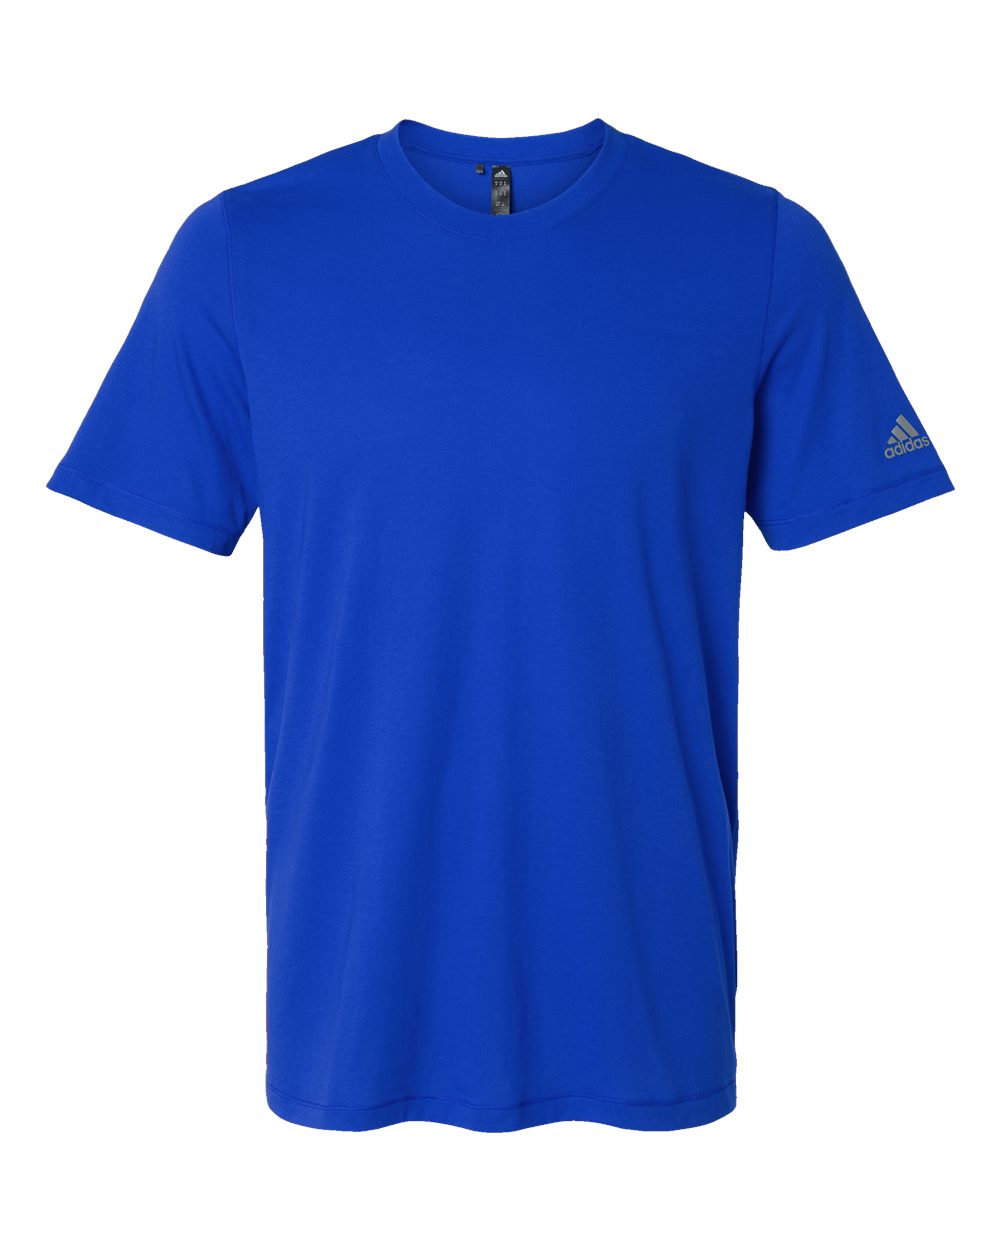 Adidas - Blended T-Shirt - A556